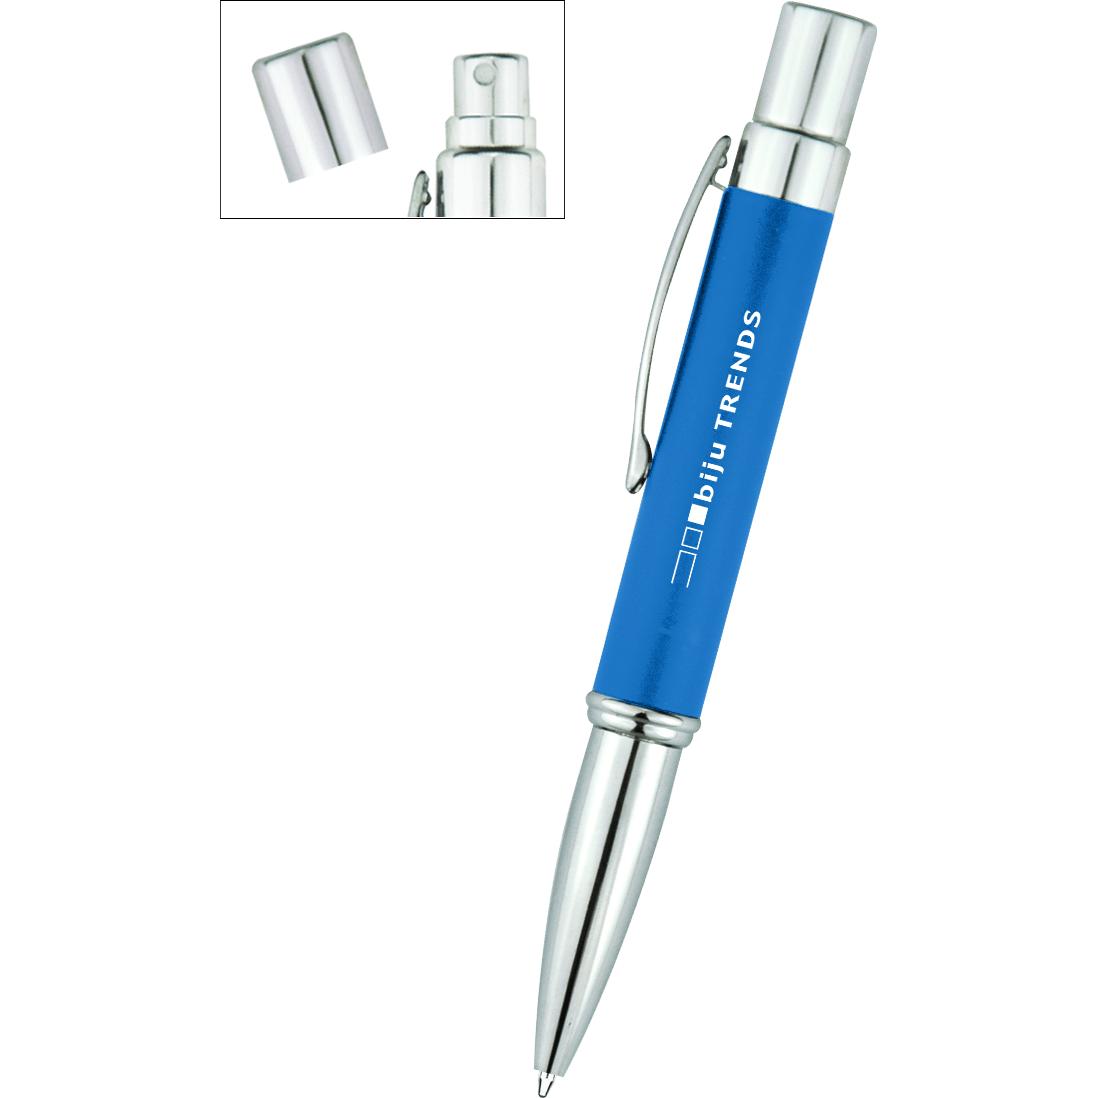 Blue / Silver Aluminum Refillable Spray Bottle with Pen